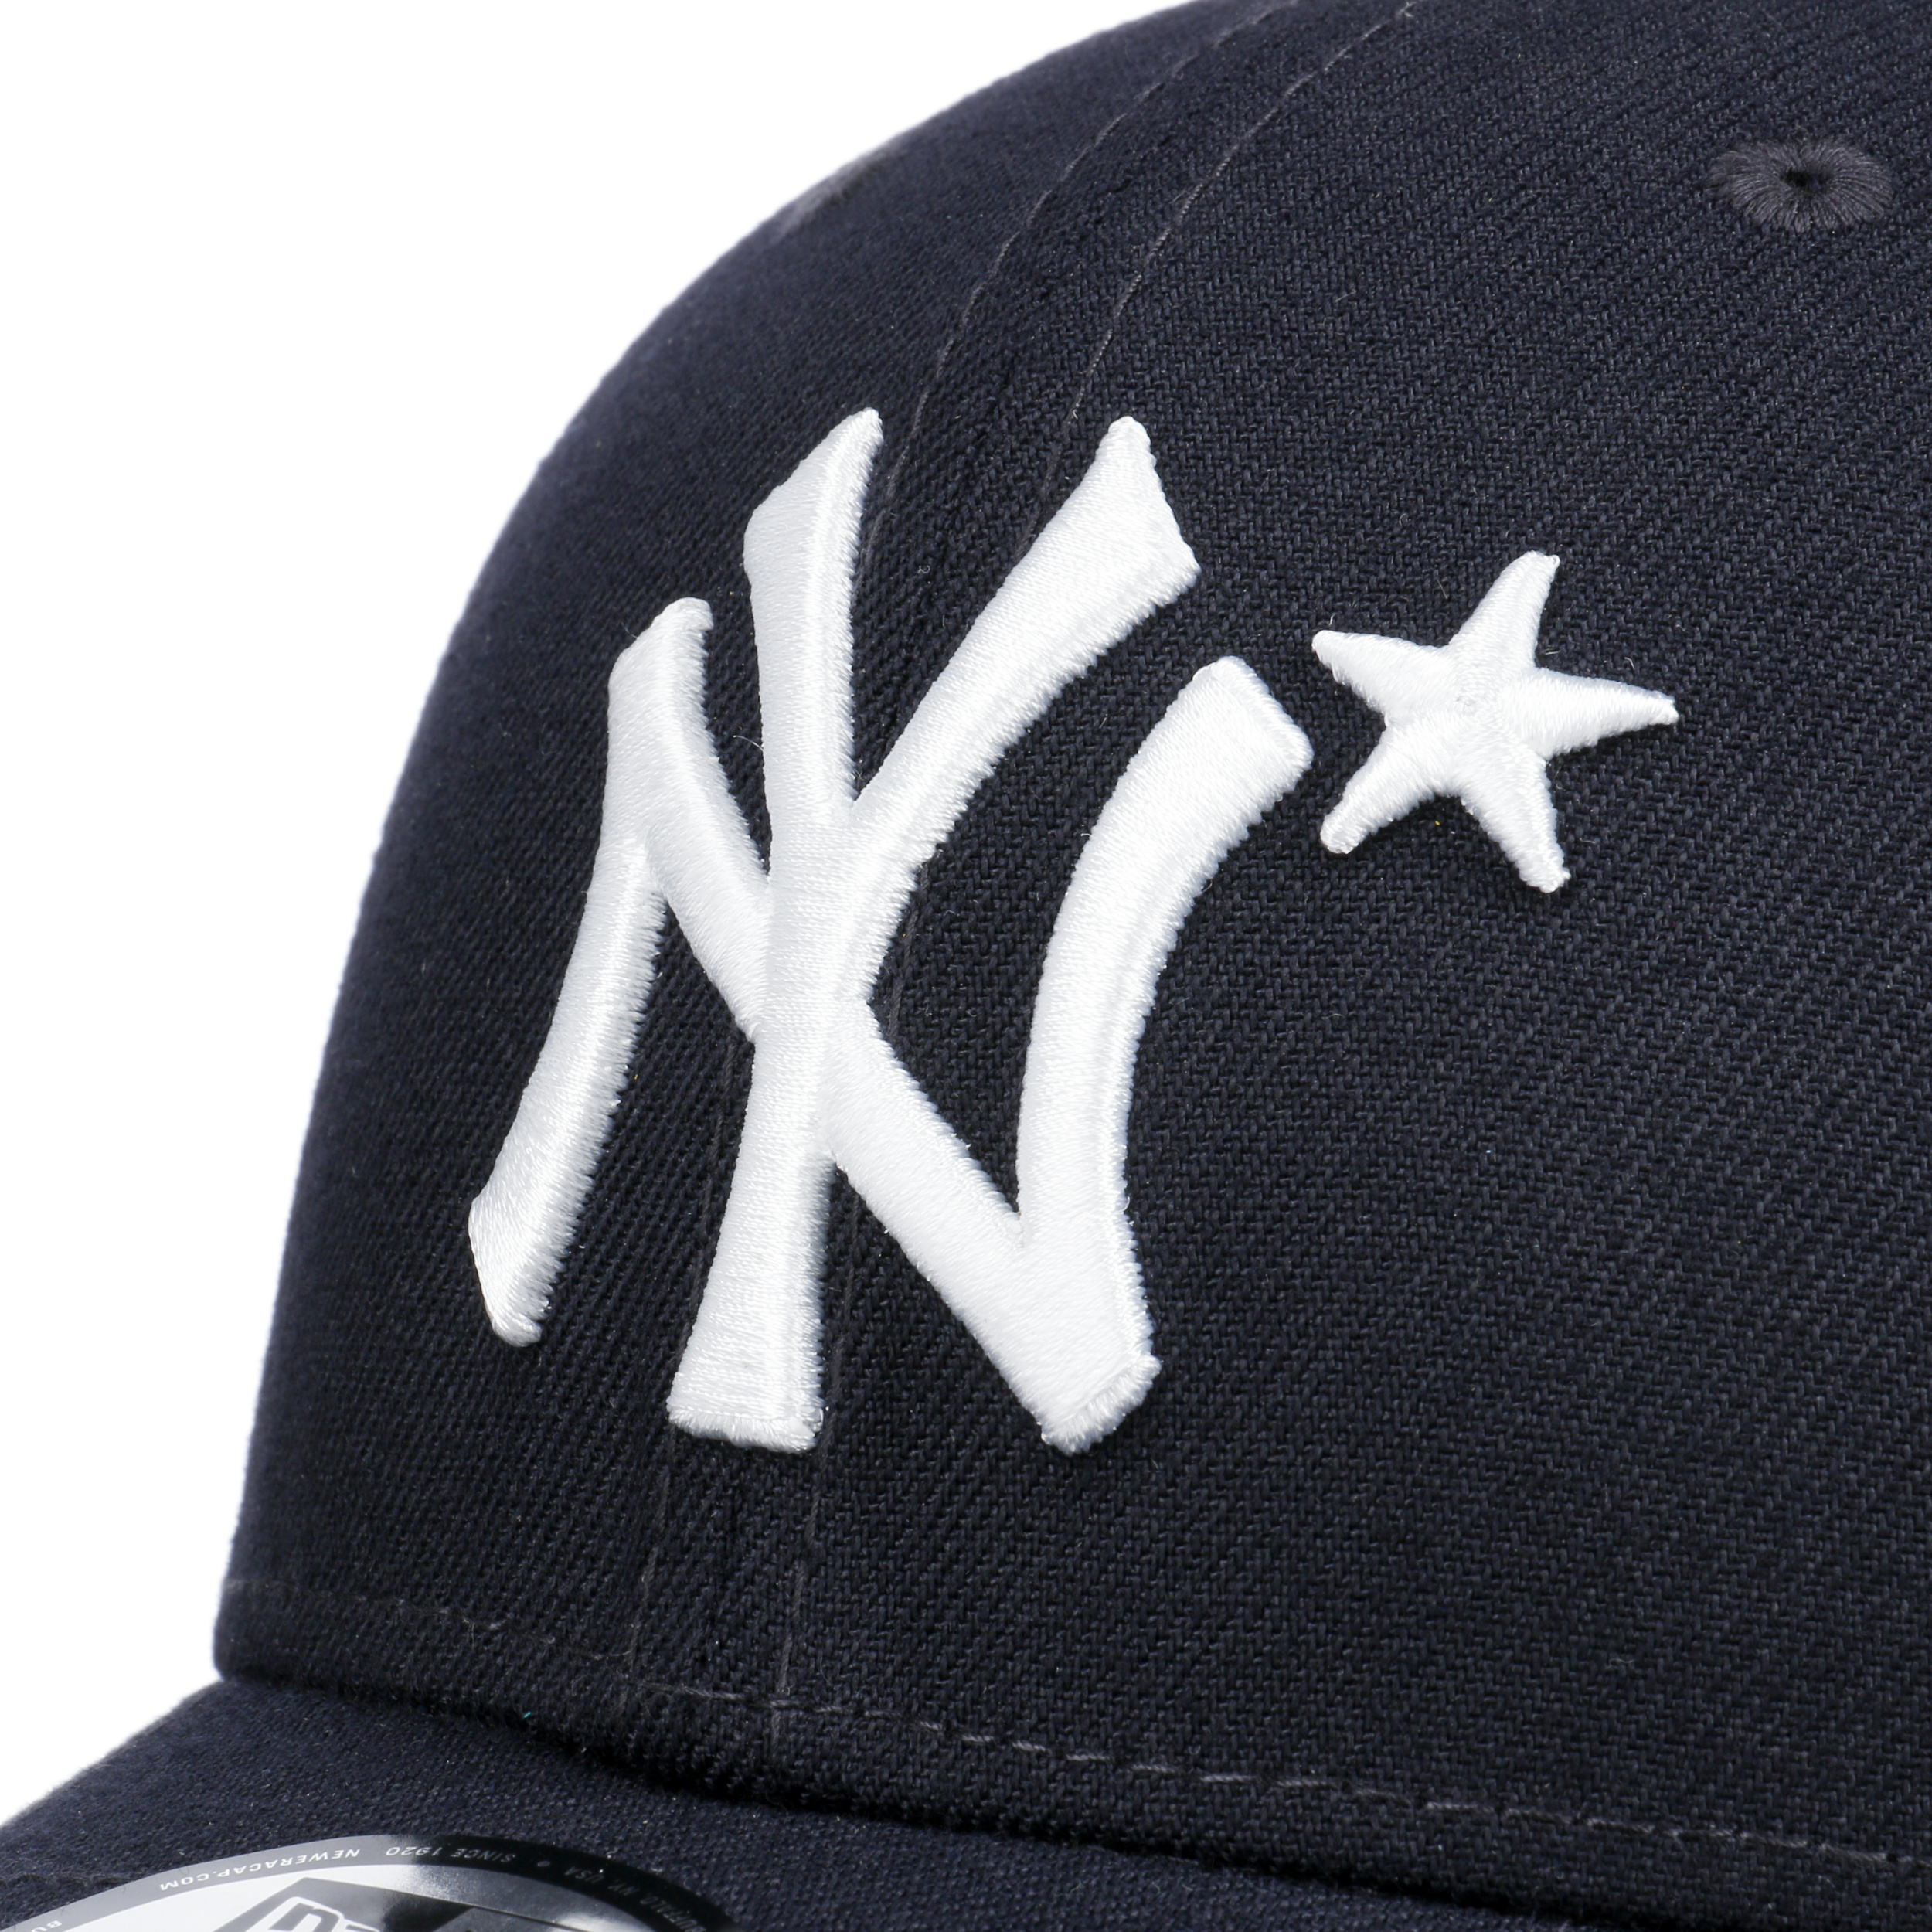 39Thirty Uni Yankees Cap by New Era - 32,95 €